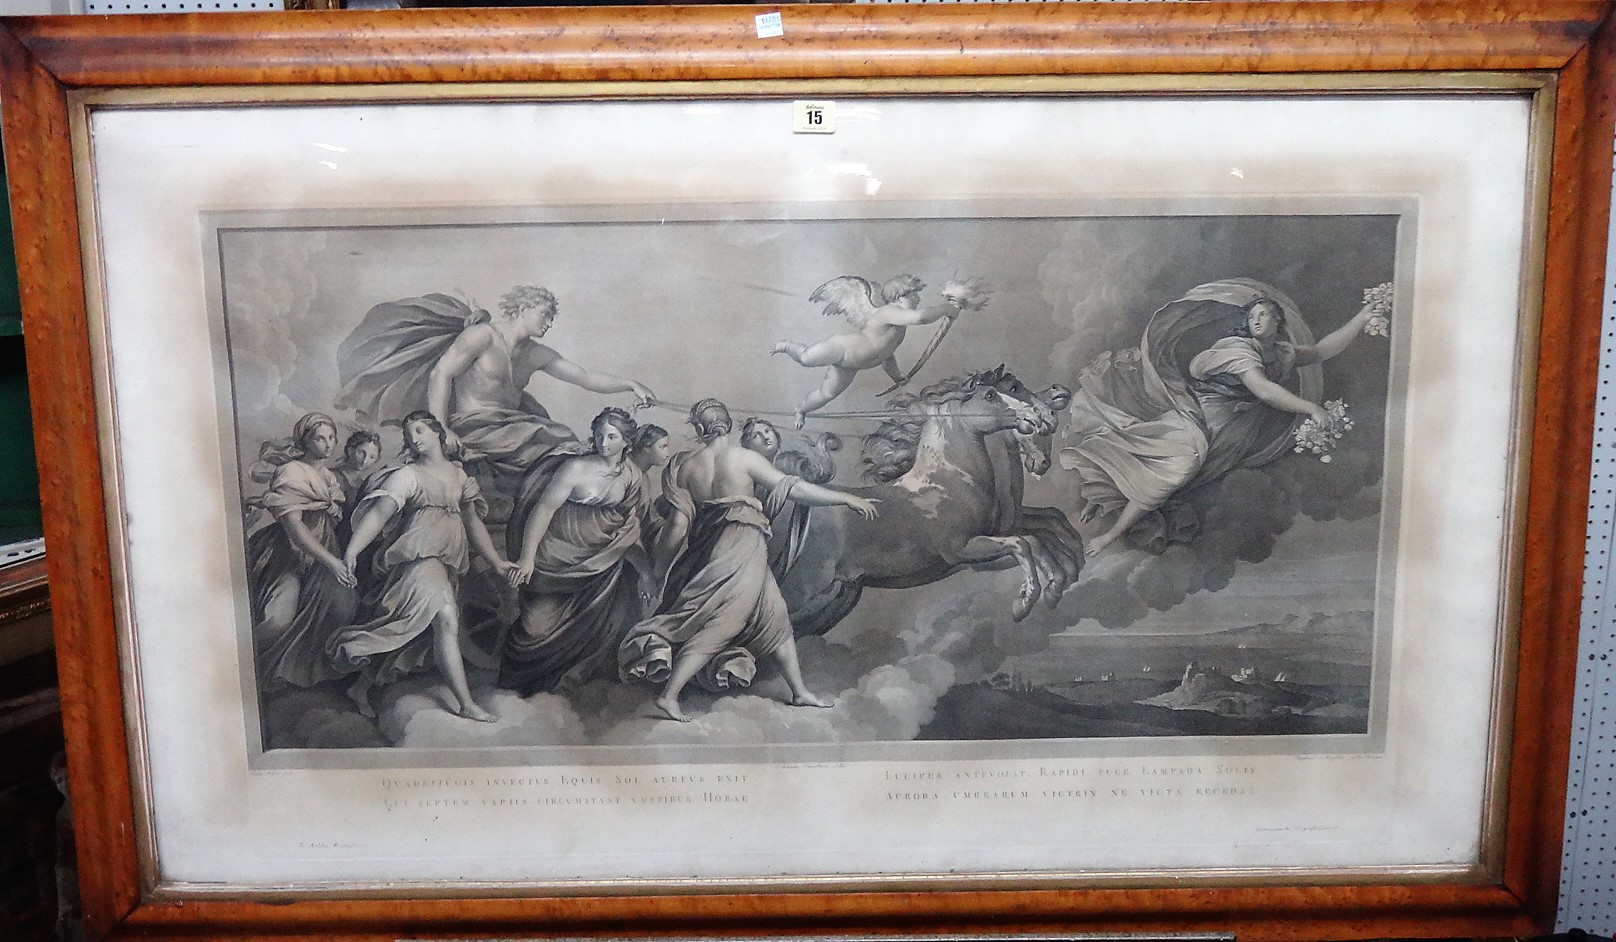 After Guido Reni, Quadrijugis Invectus Equis sol Aureus, engraving by Raphael C. Herghem, 51cm x 91.5cm.